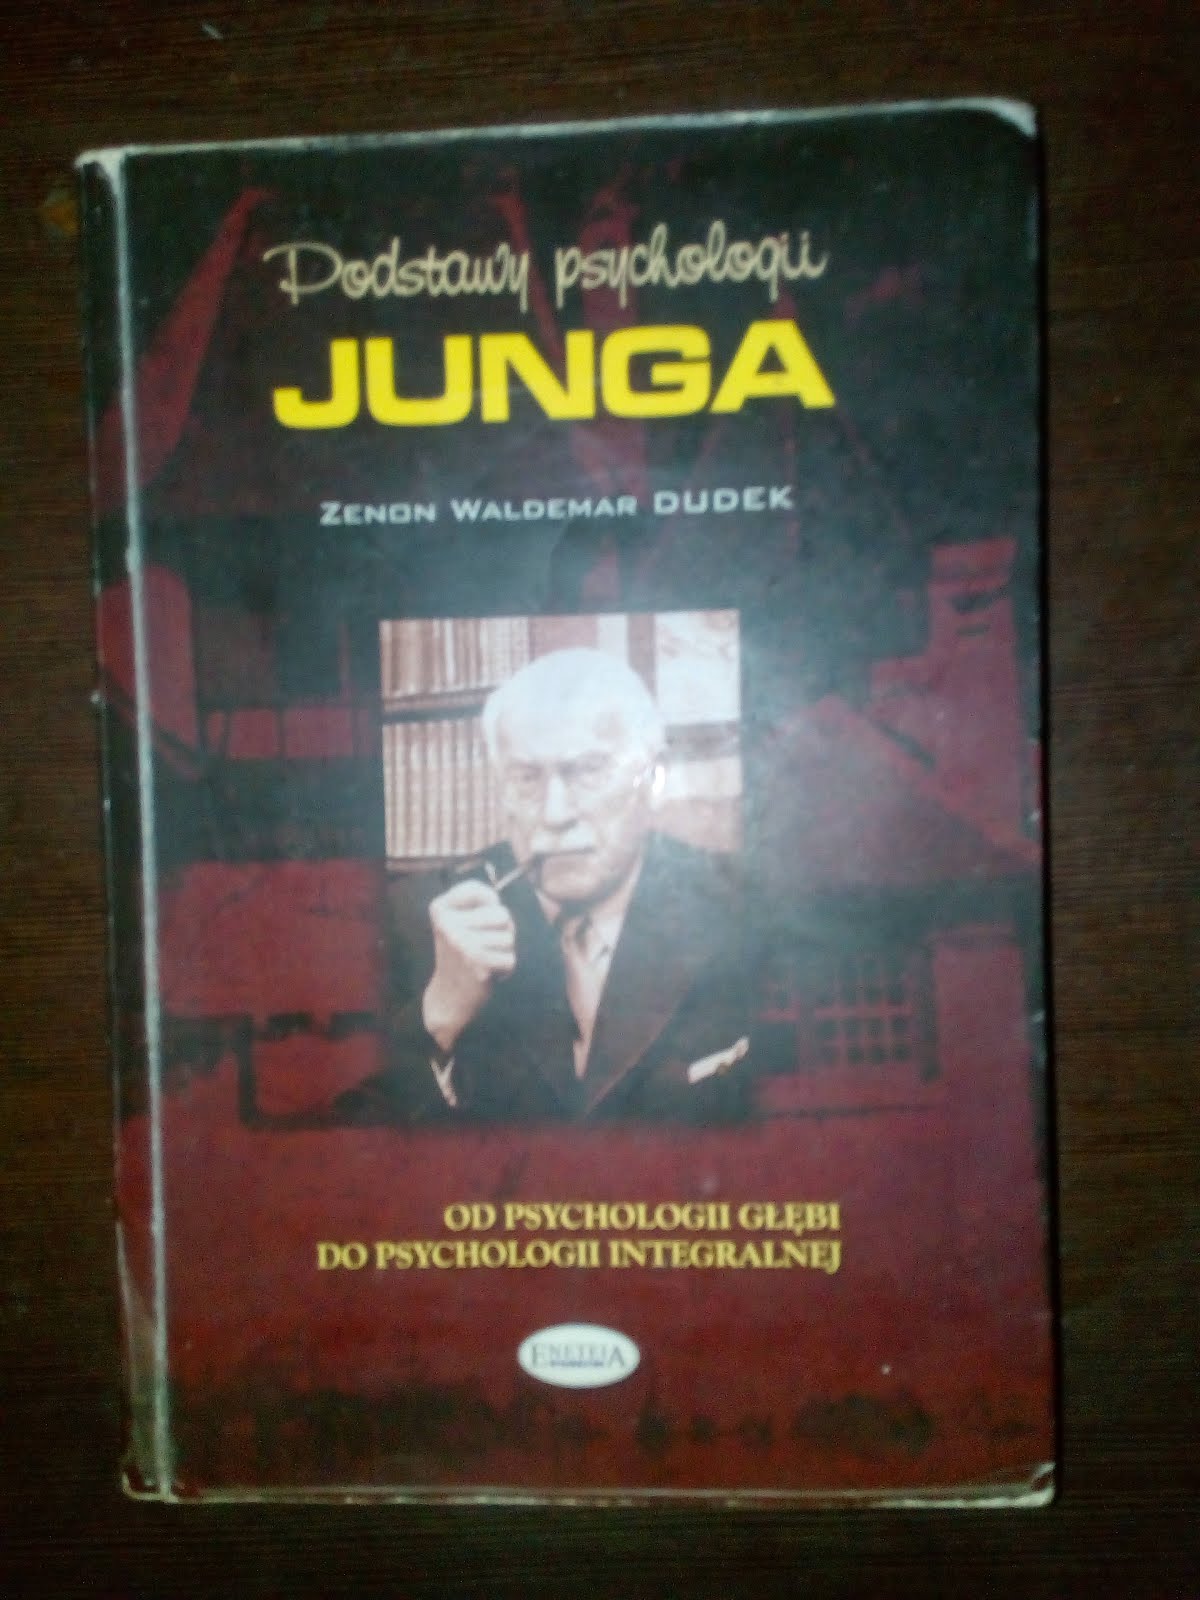 Basics of Jung's Psychology.